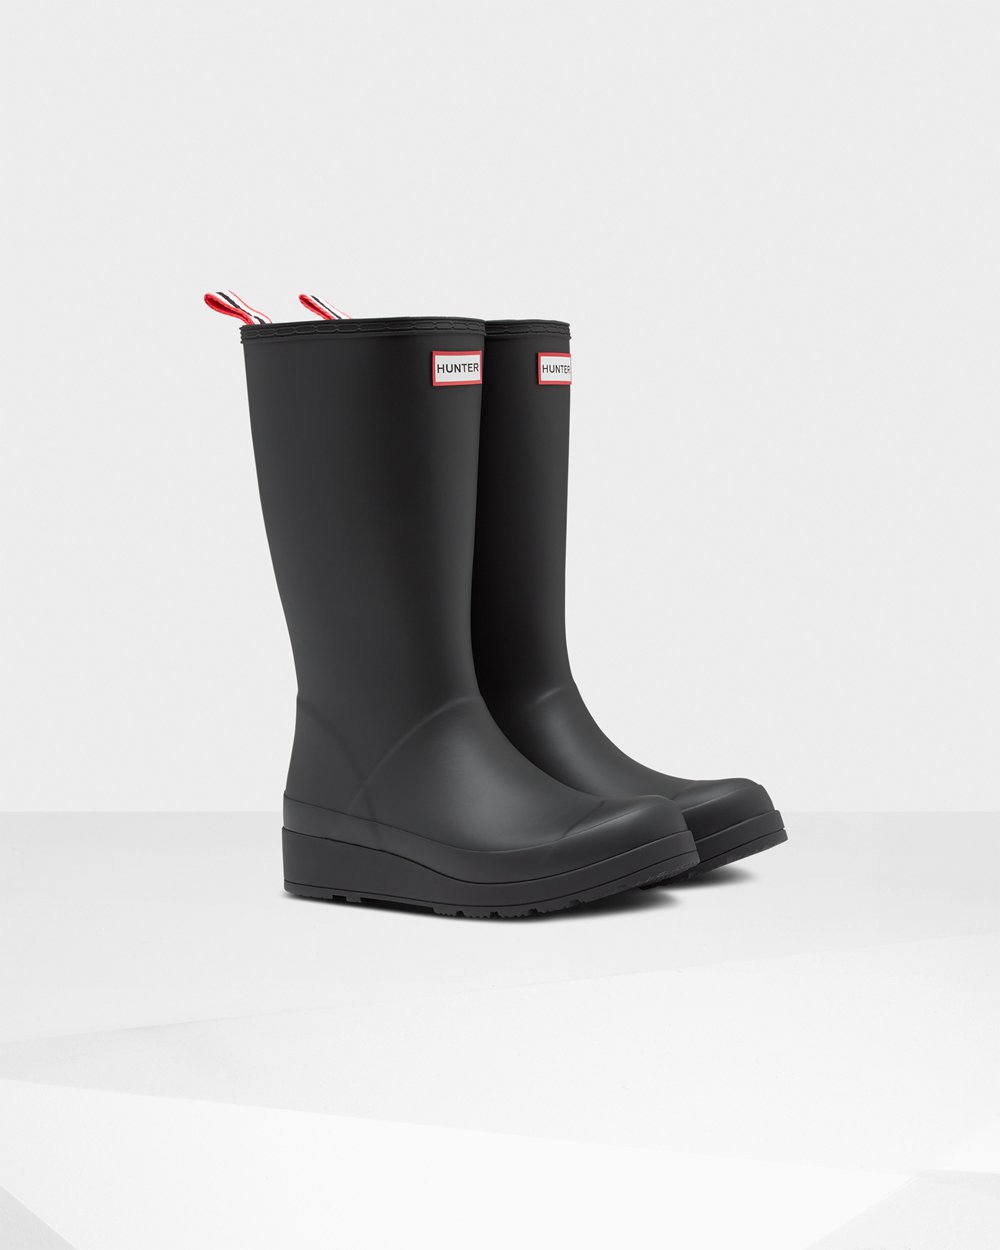 Womens Play Boots - Hunter Original Insulated Tall Rain (41XDCSOQI) - Black